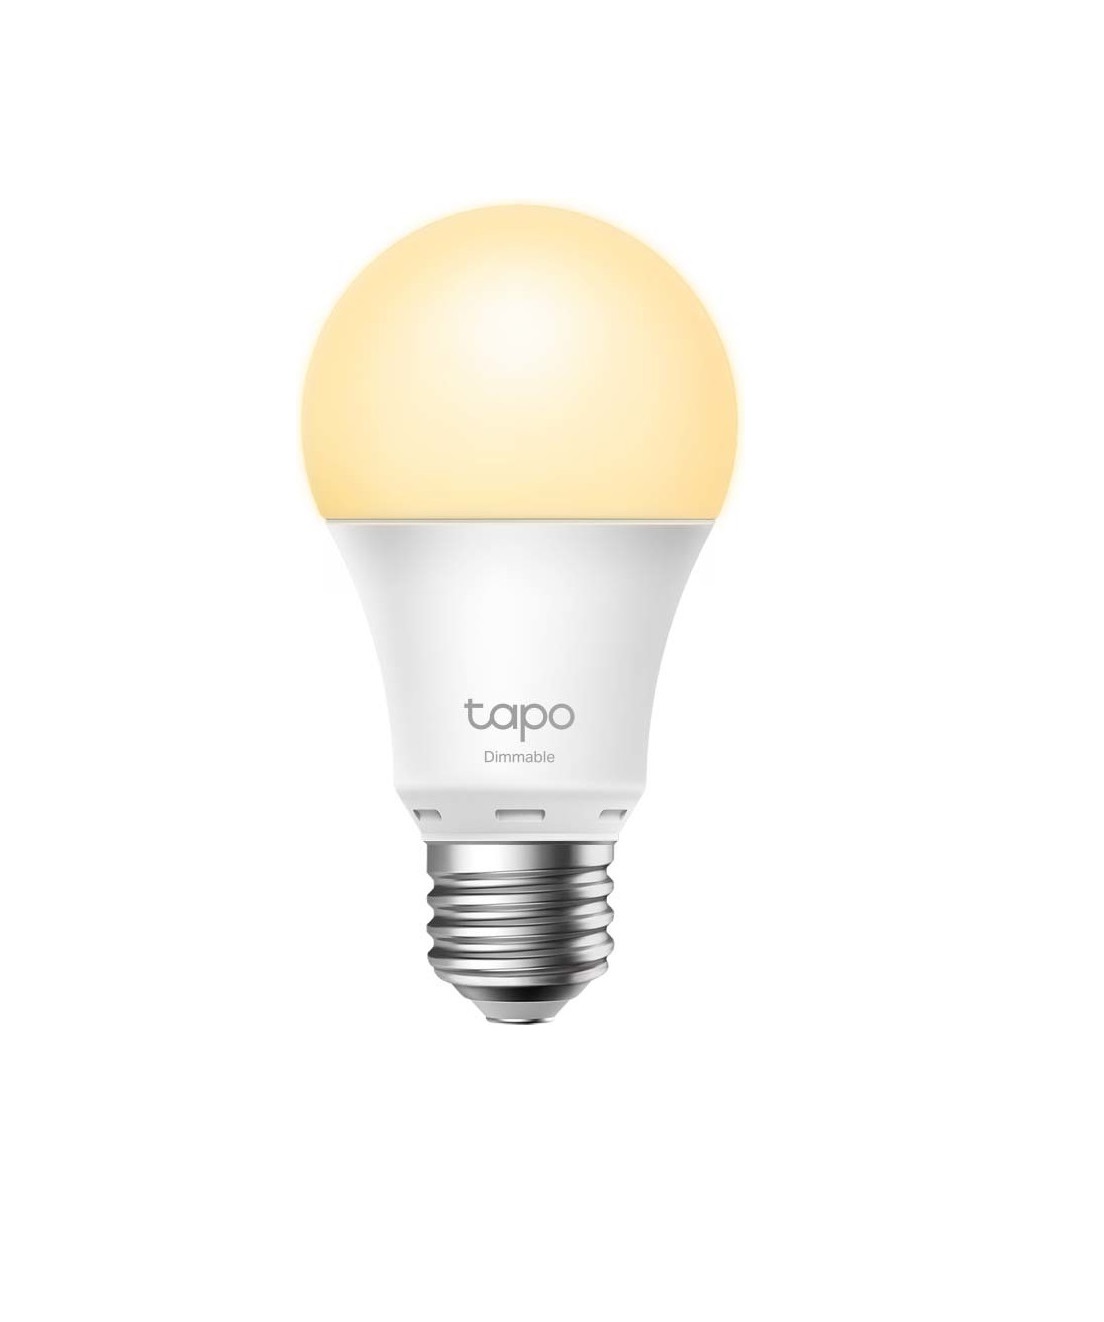 Tp-Link Tapo L510E Smart Wi-Fi Light Bulb, Dimmable for E27 socket